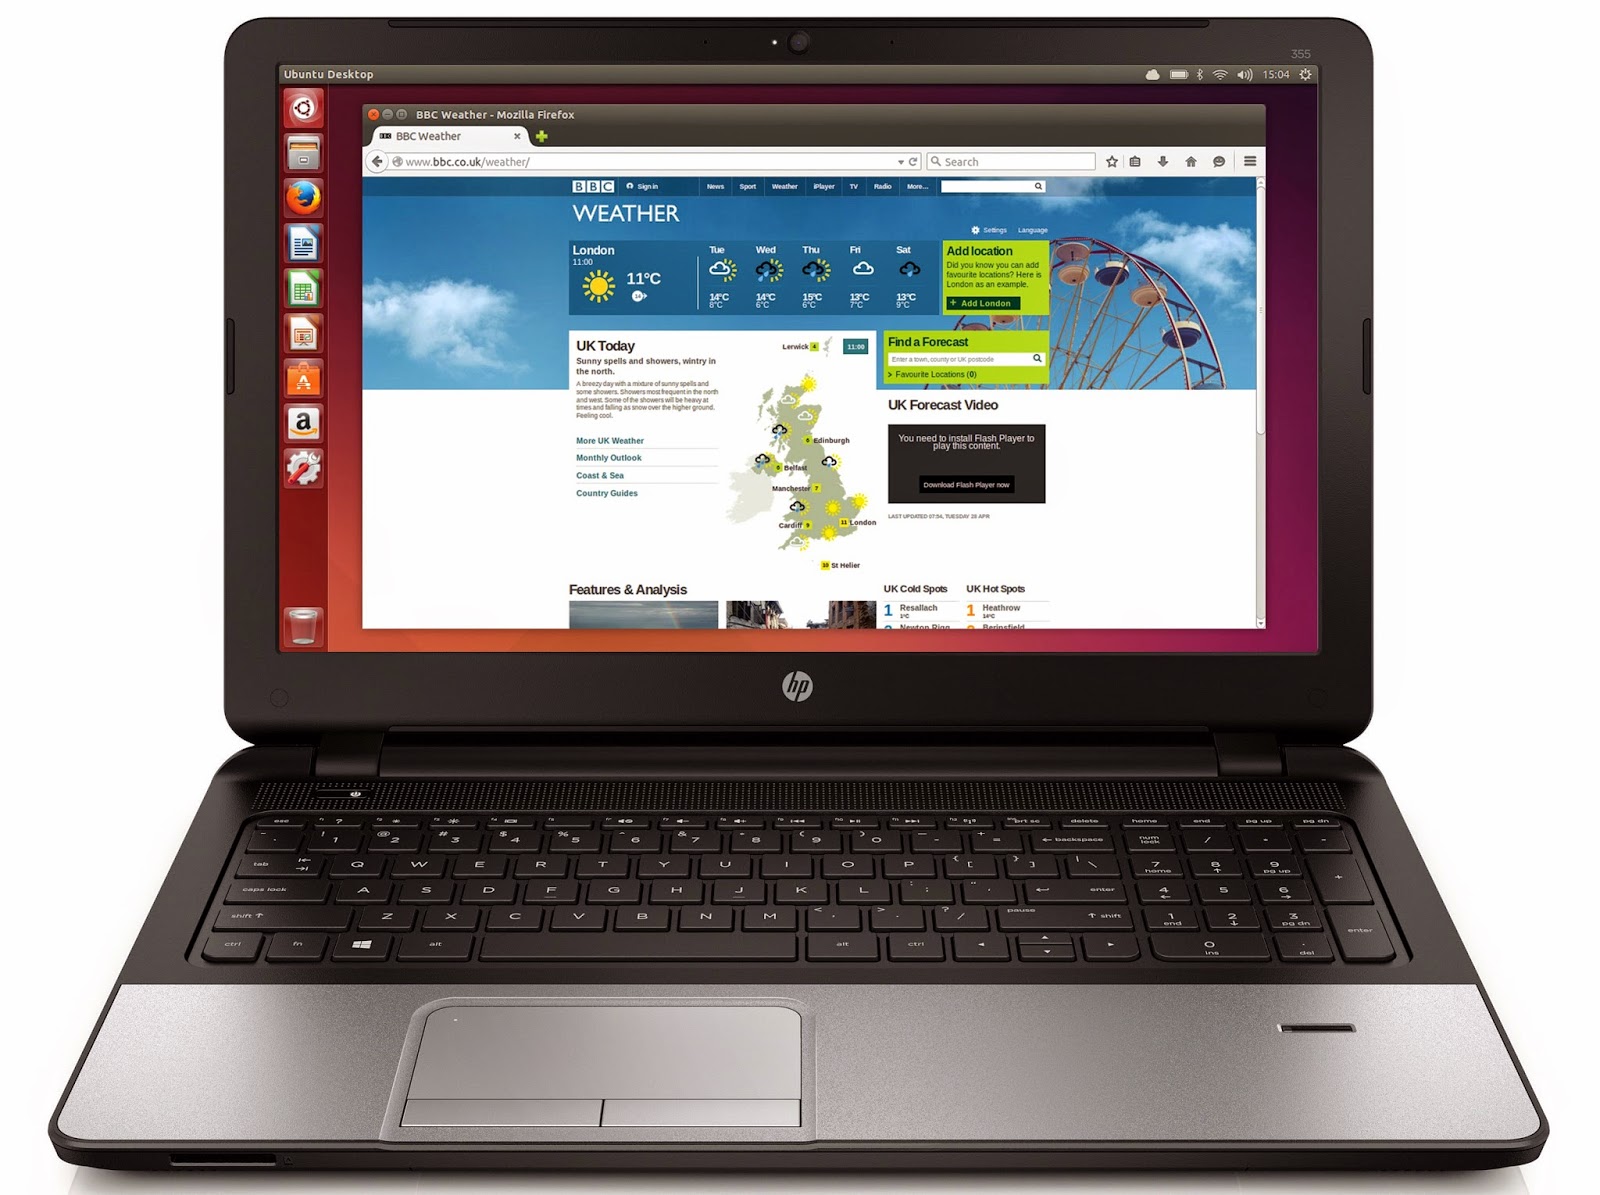 AMD powered hp ubuntu laptops